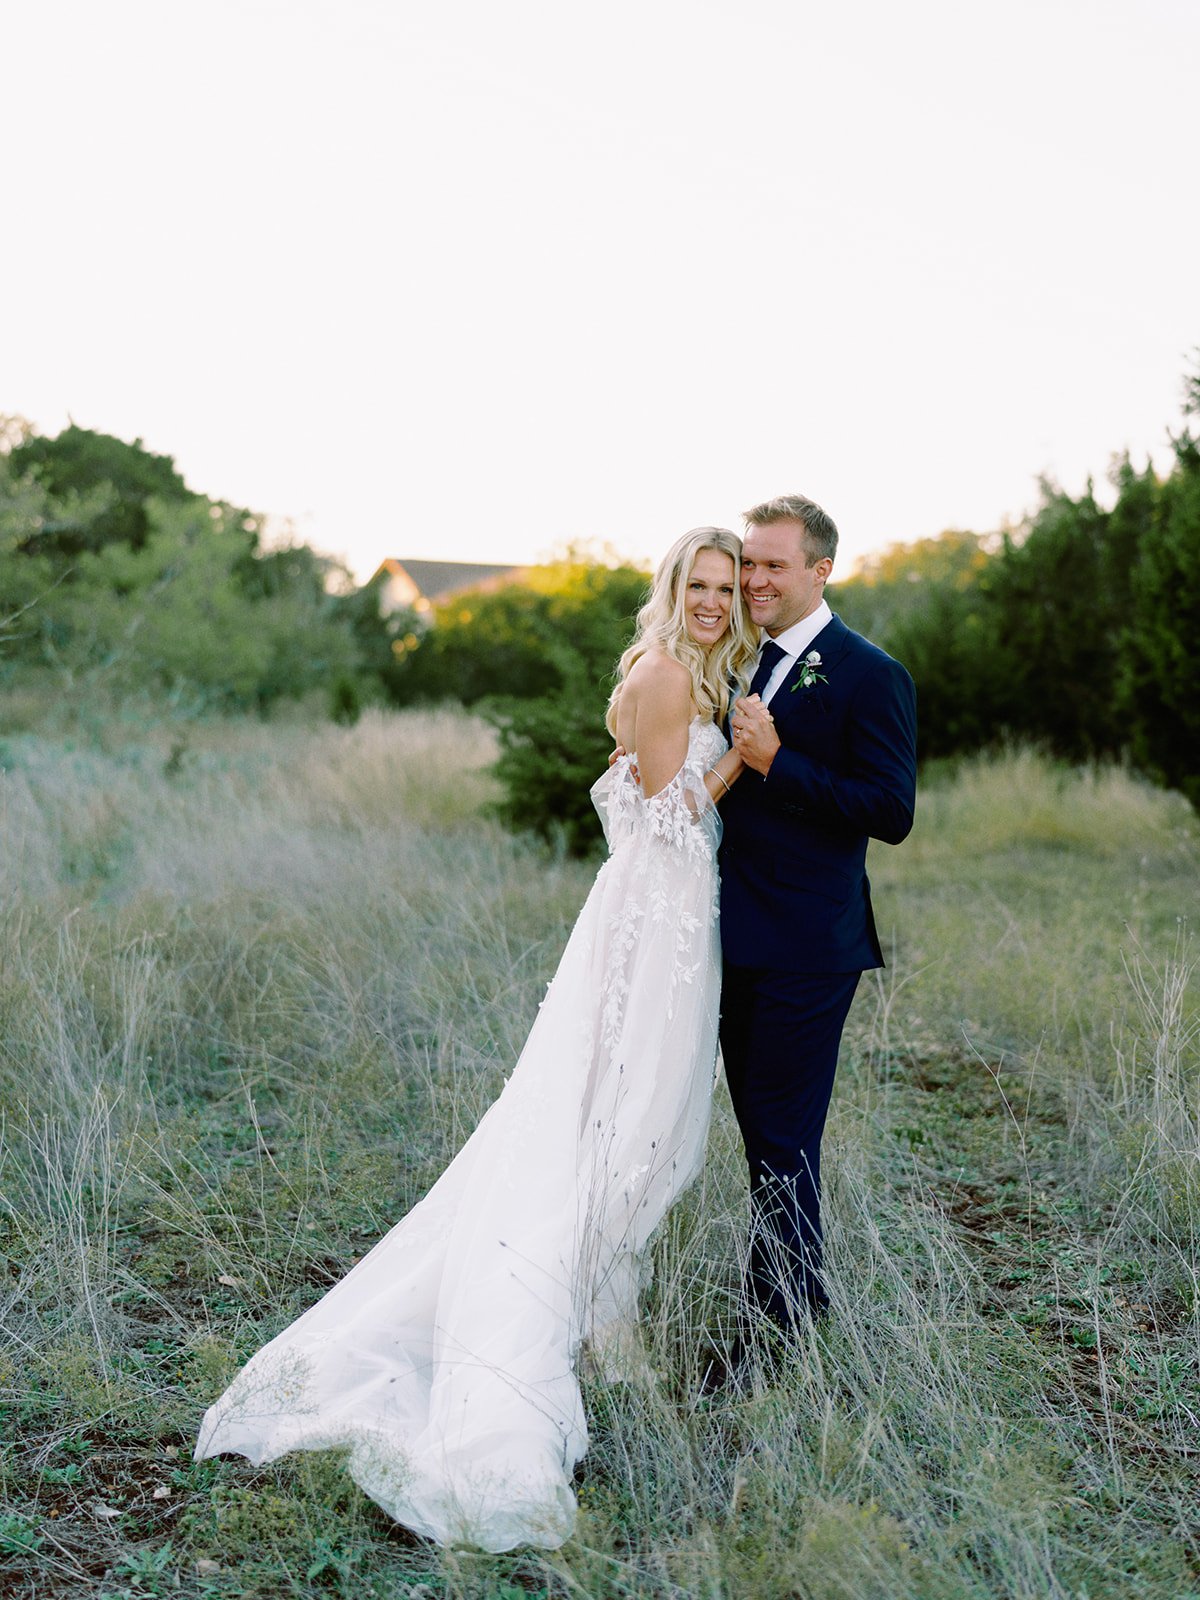 Best-Austin-Wedding-Photographers-Elopement-Film-35mm-Asheville-Santa-Barbara-Backyard-113.jpg